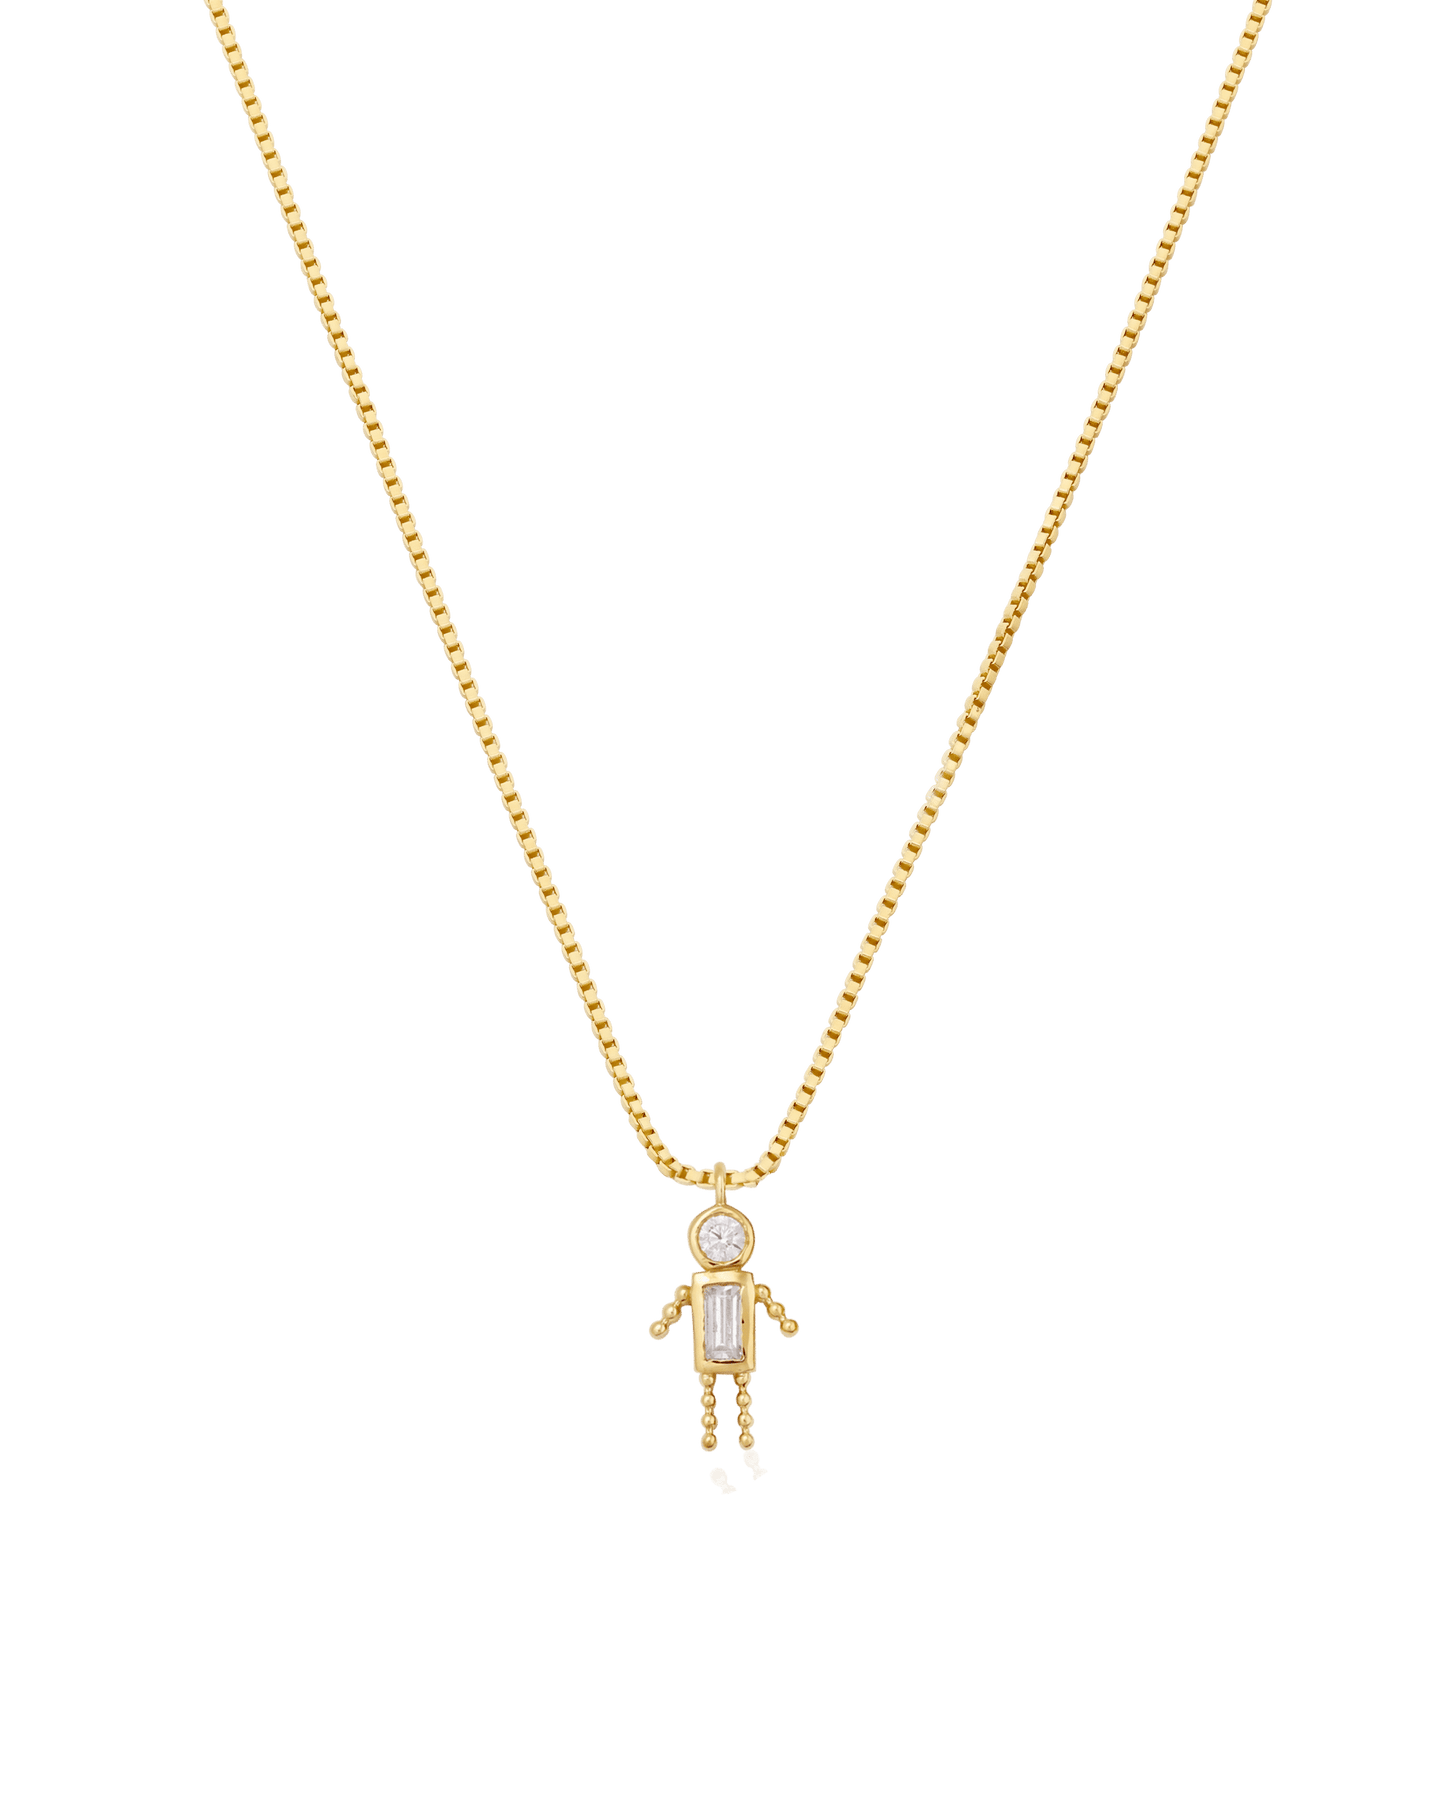 Single Mini Me Necklace - 18K Gold Vermeil Necklaces magal-dev 1 Small - 16" 